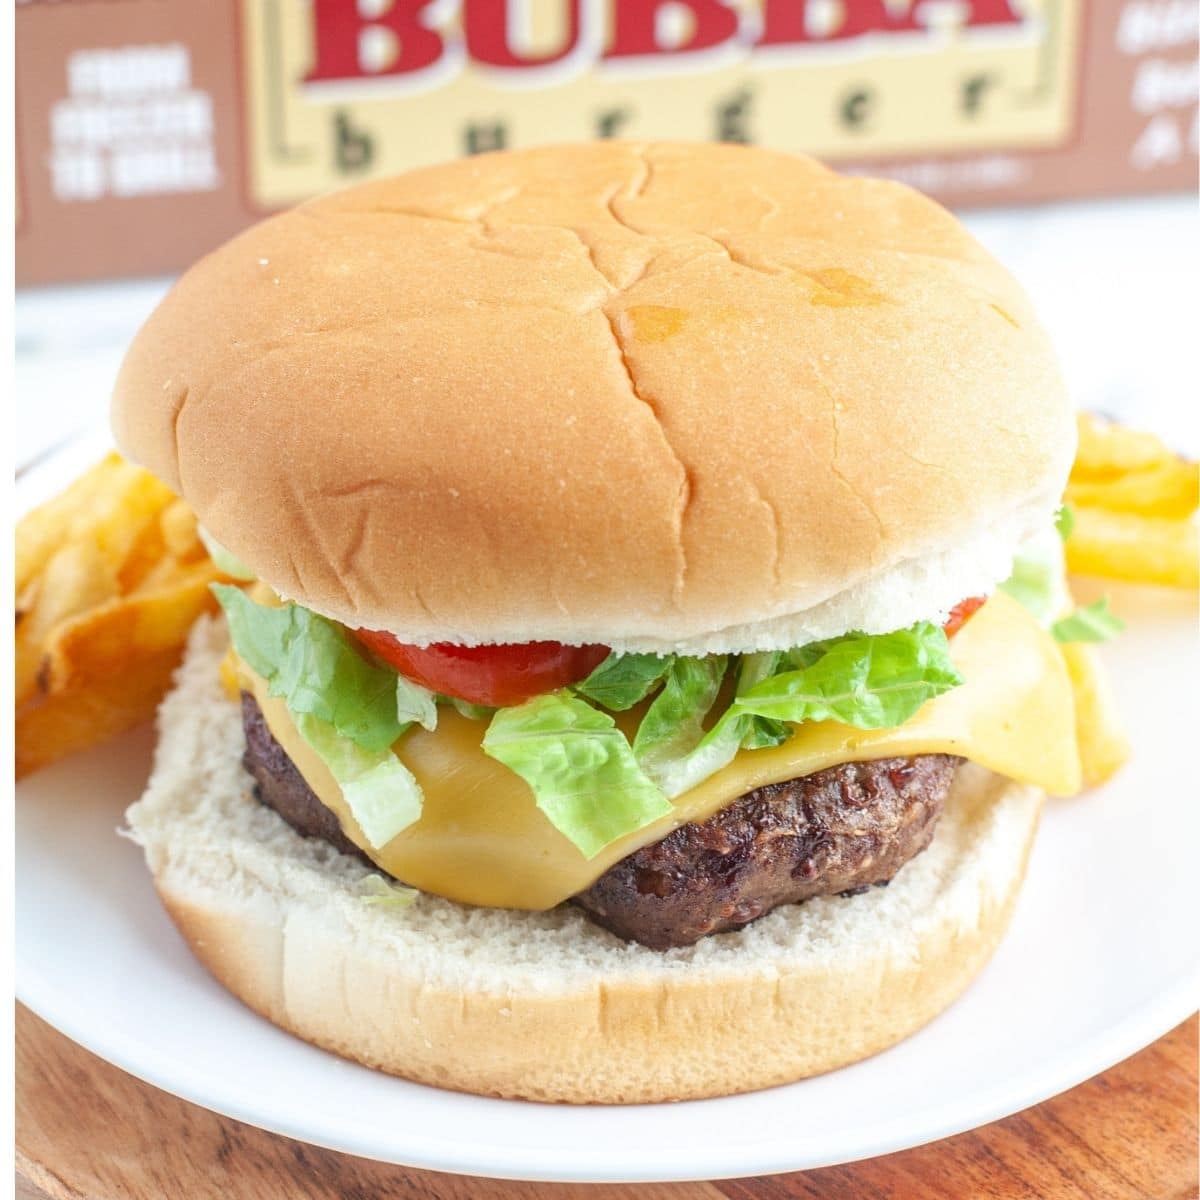 Bubba Burgers In Air Fryer 